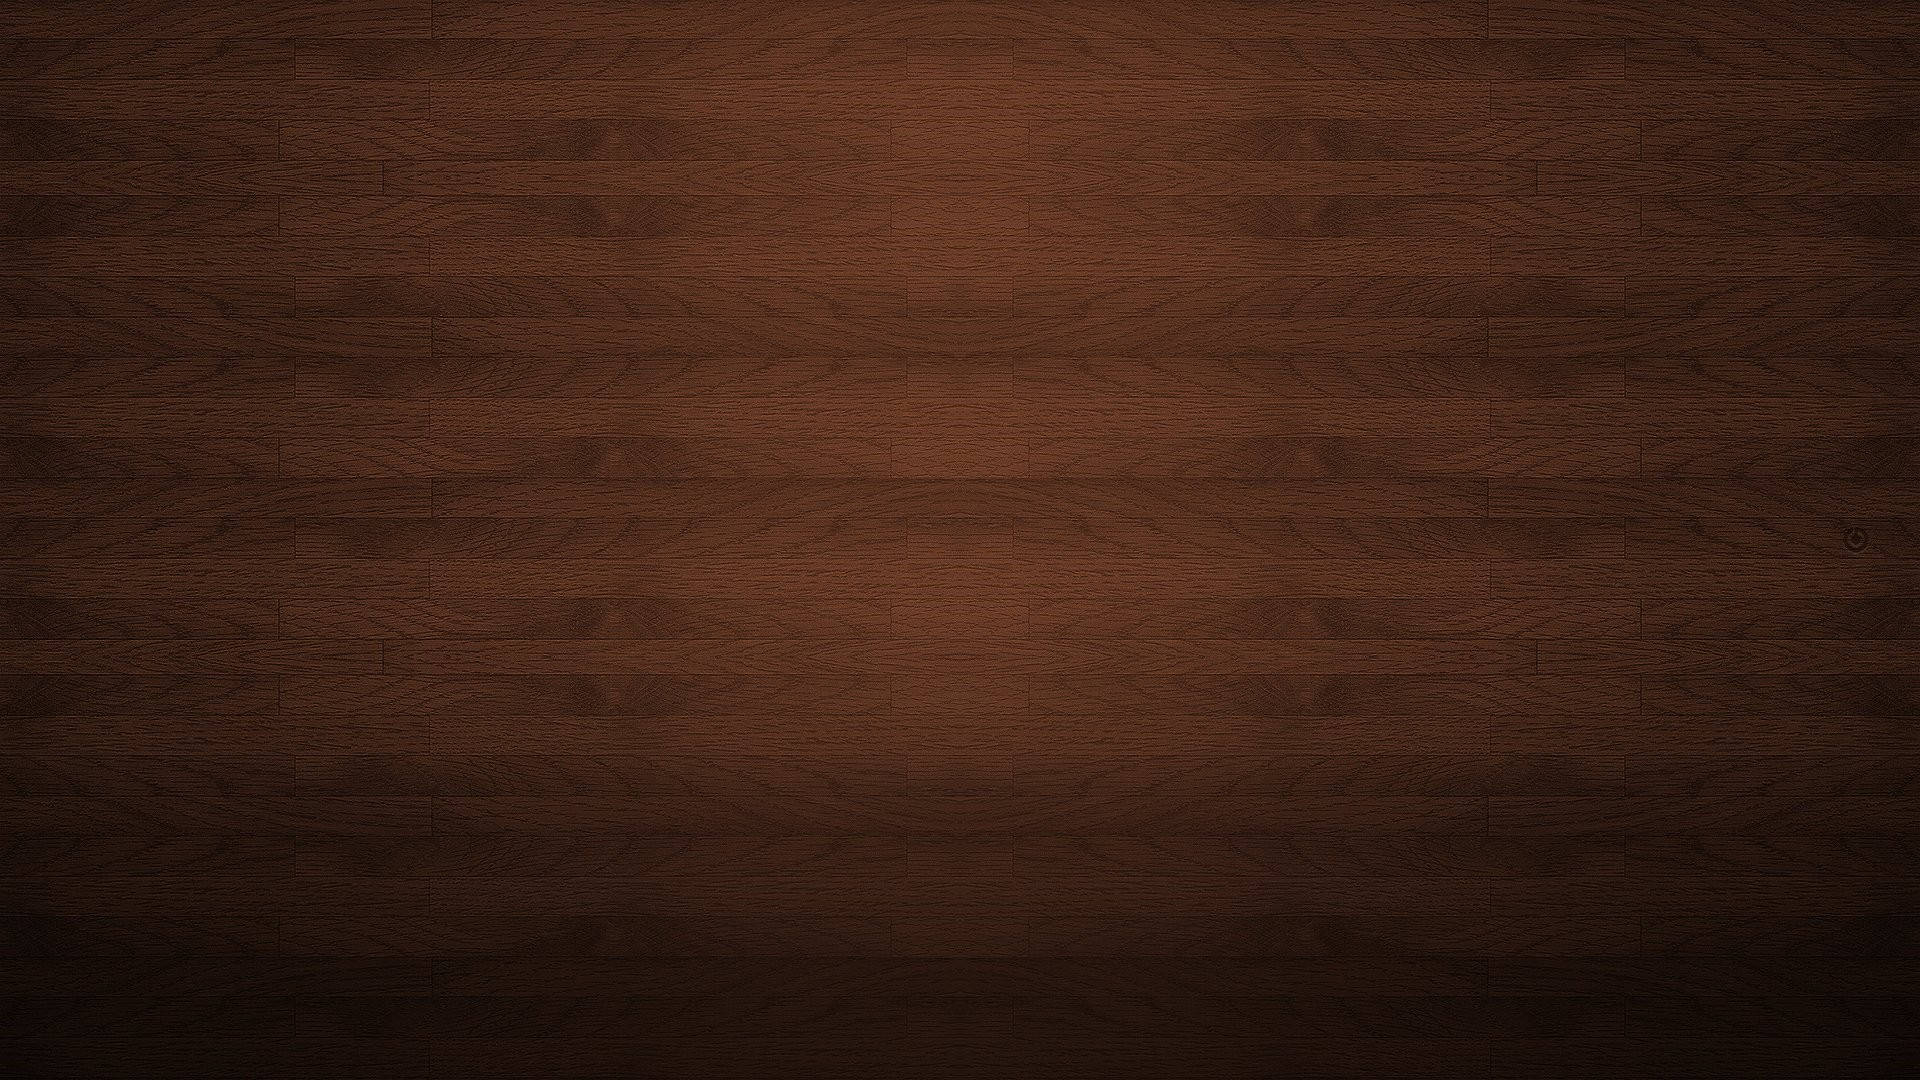 Basic Brown Wooden Background